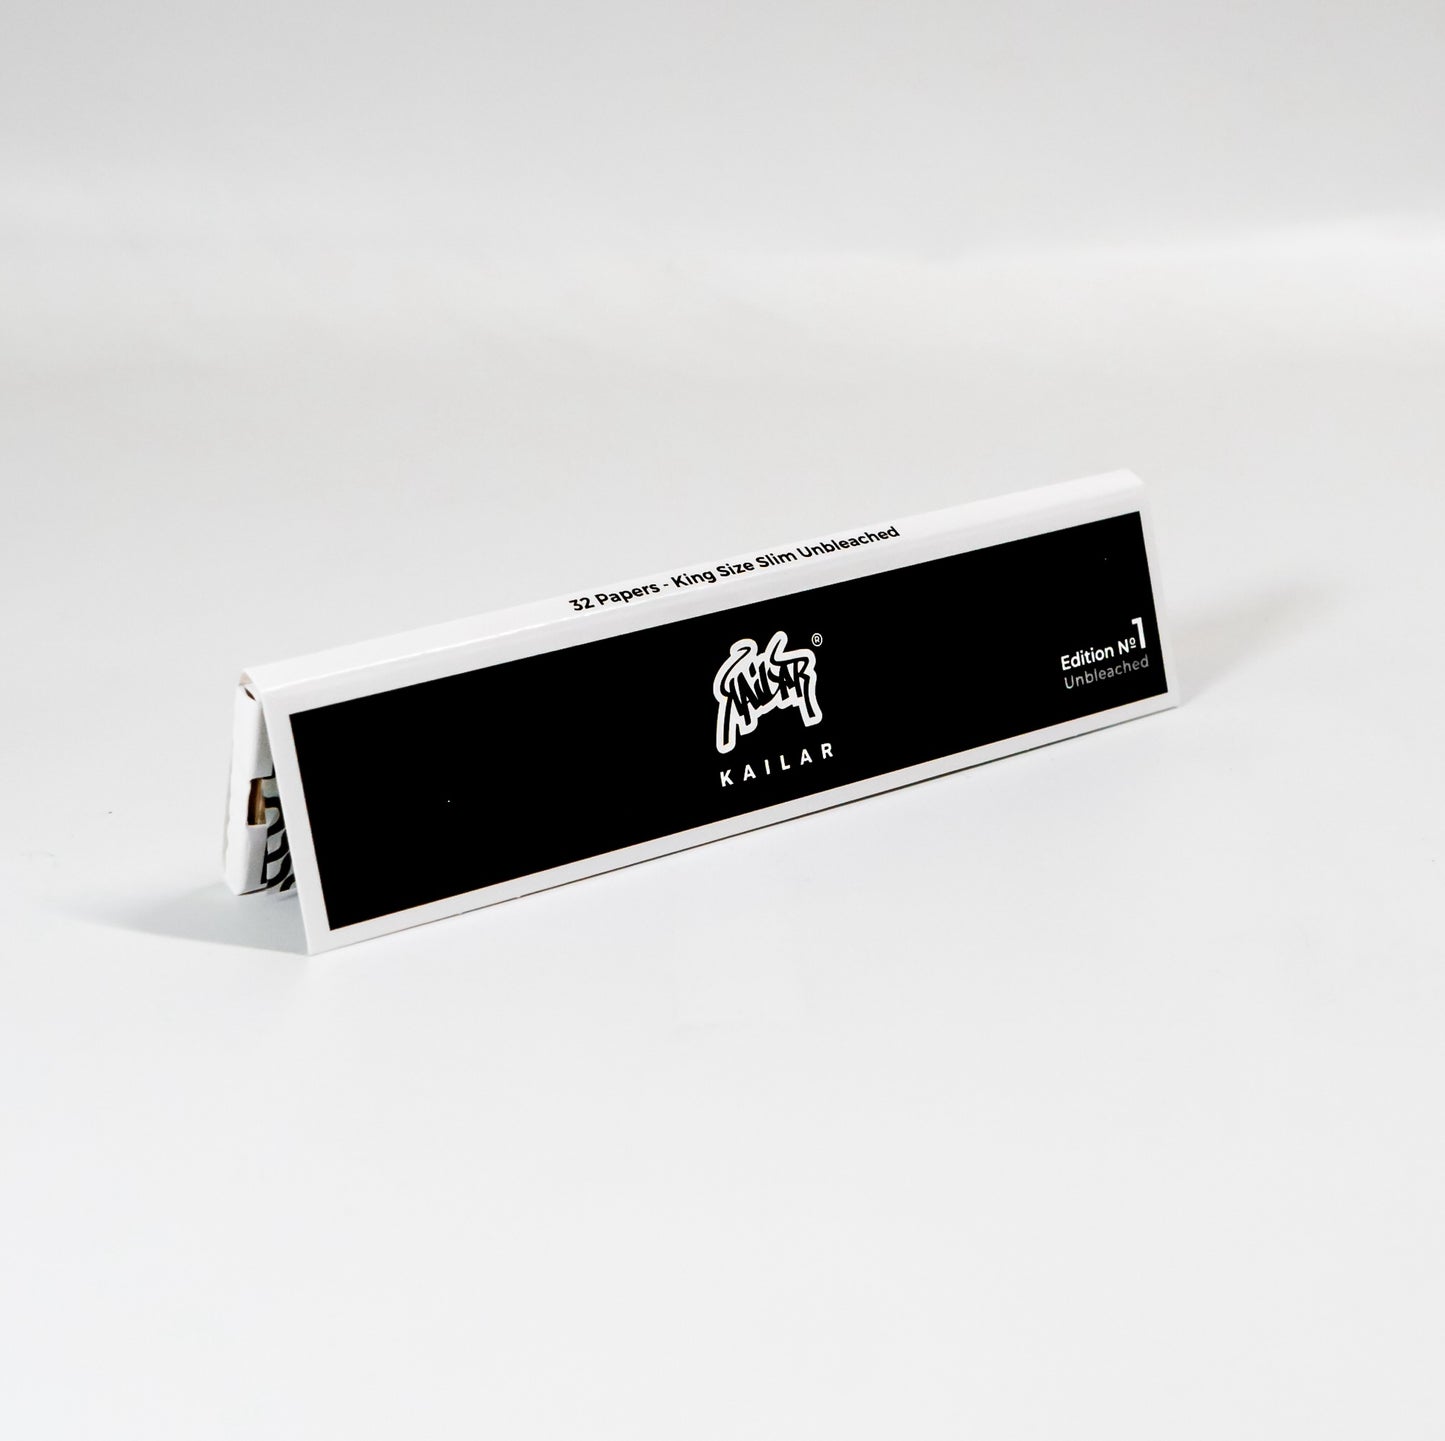 50x32 Longpapers Box Edition 1